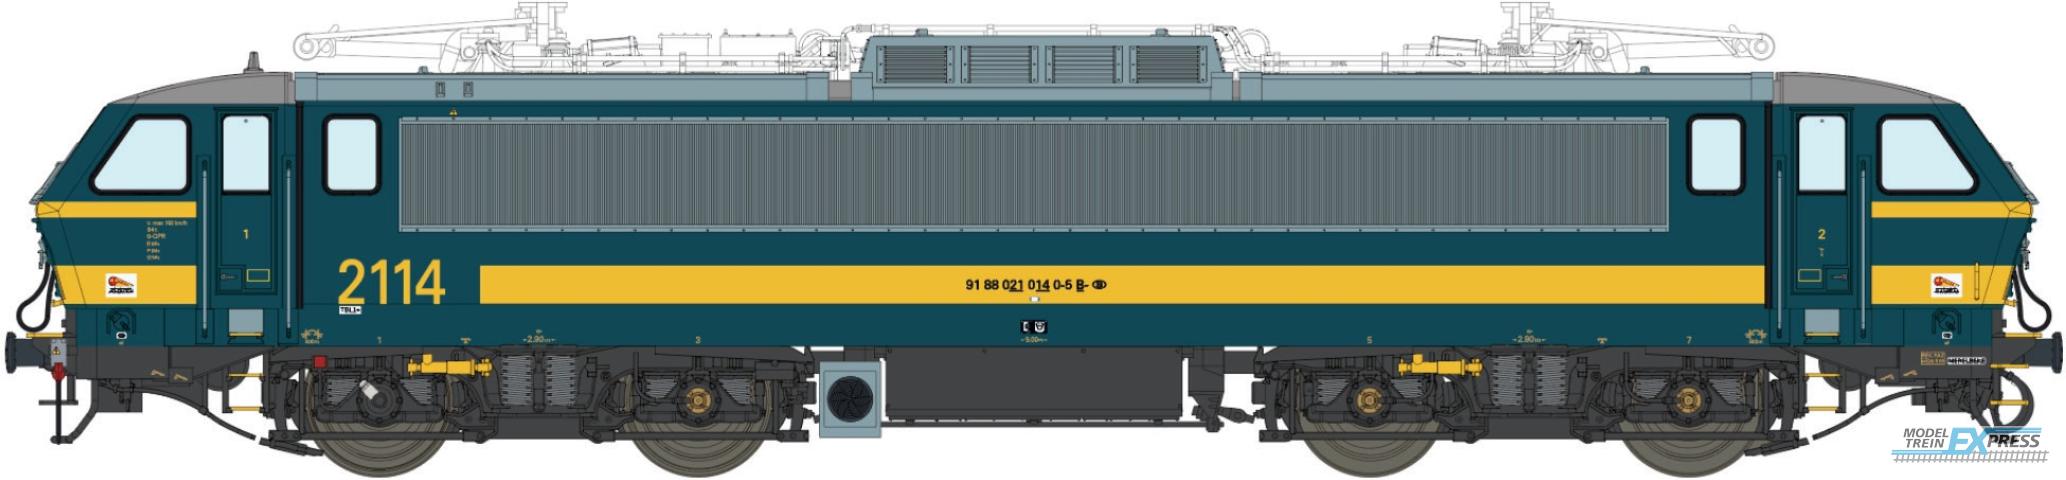 LS Models 12577 2114, blauw, gele lijn, 1e serie, met airco, Magelan logo  /  Ep. V-VI  /  SNCB  /  HO  /  AC  /  1 P.